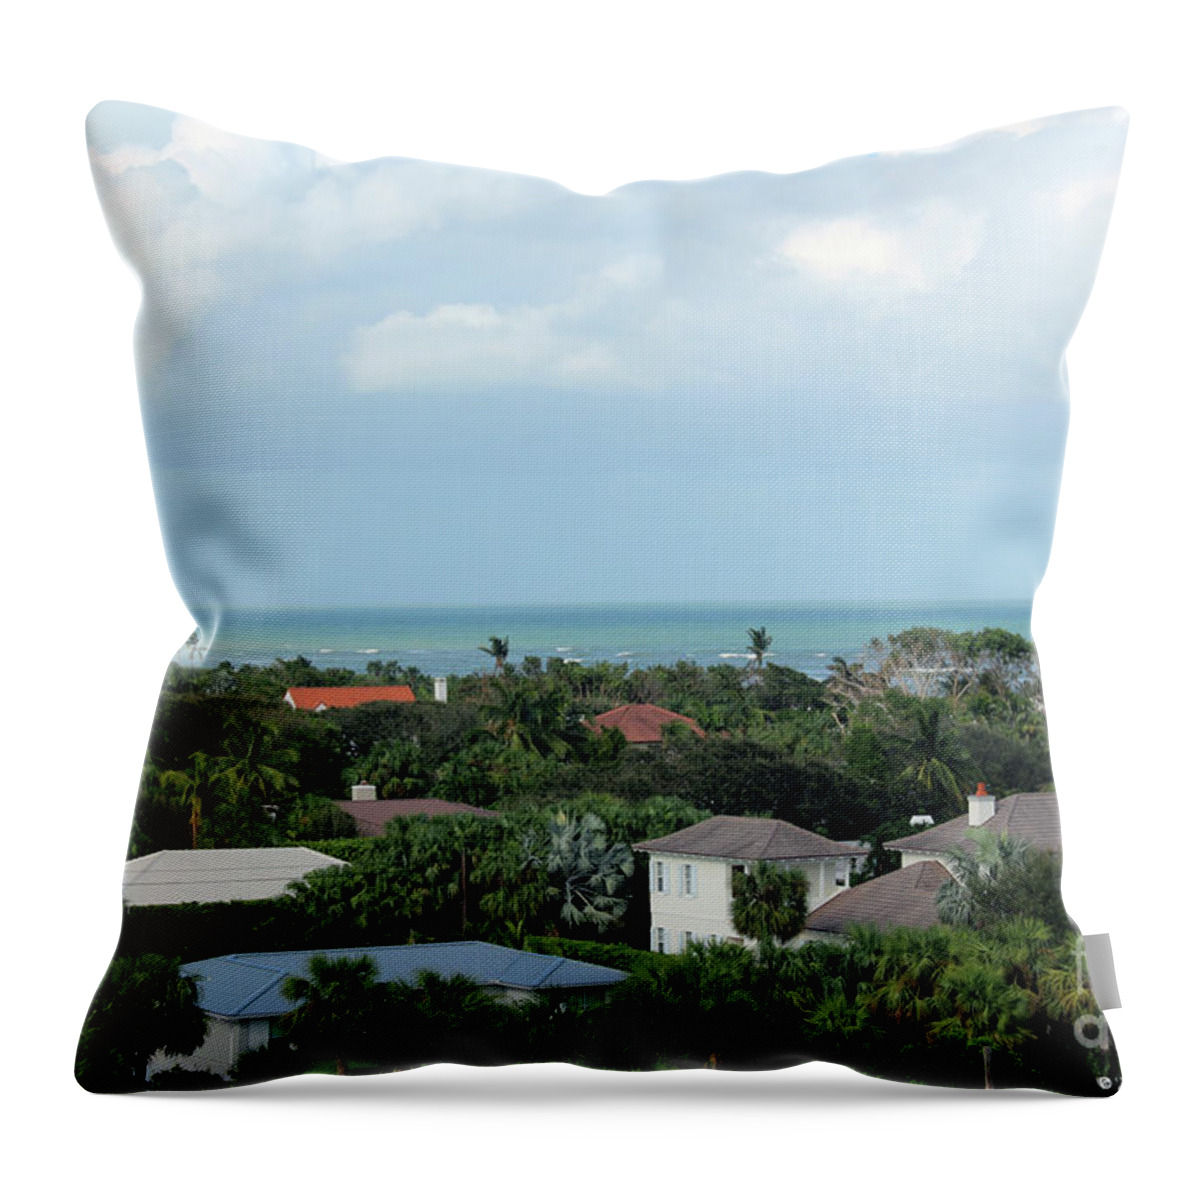 Florida Throw Pillow featuring the photograph Beautiful Vero Beach Florida by Megan Dirsa-DuBois